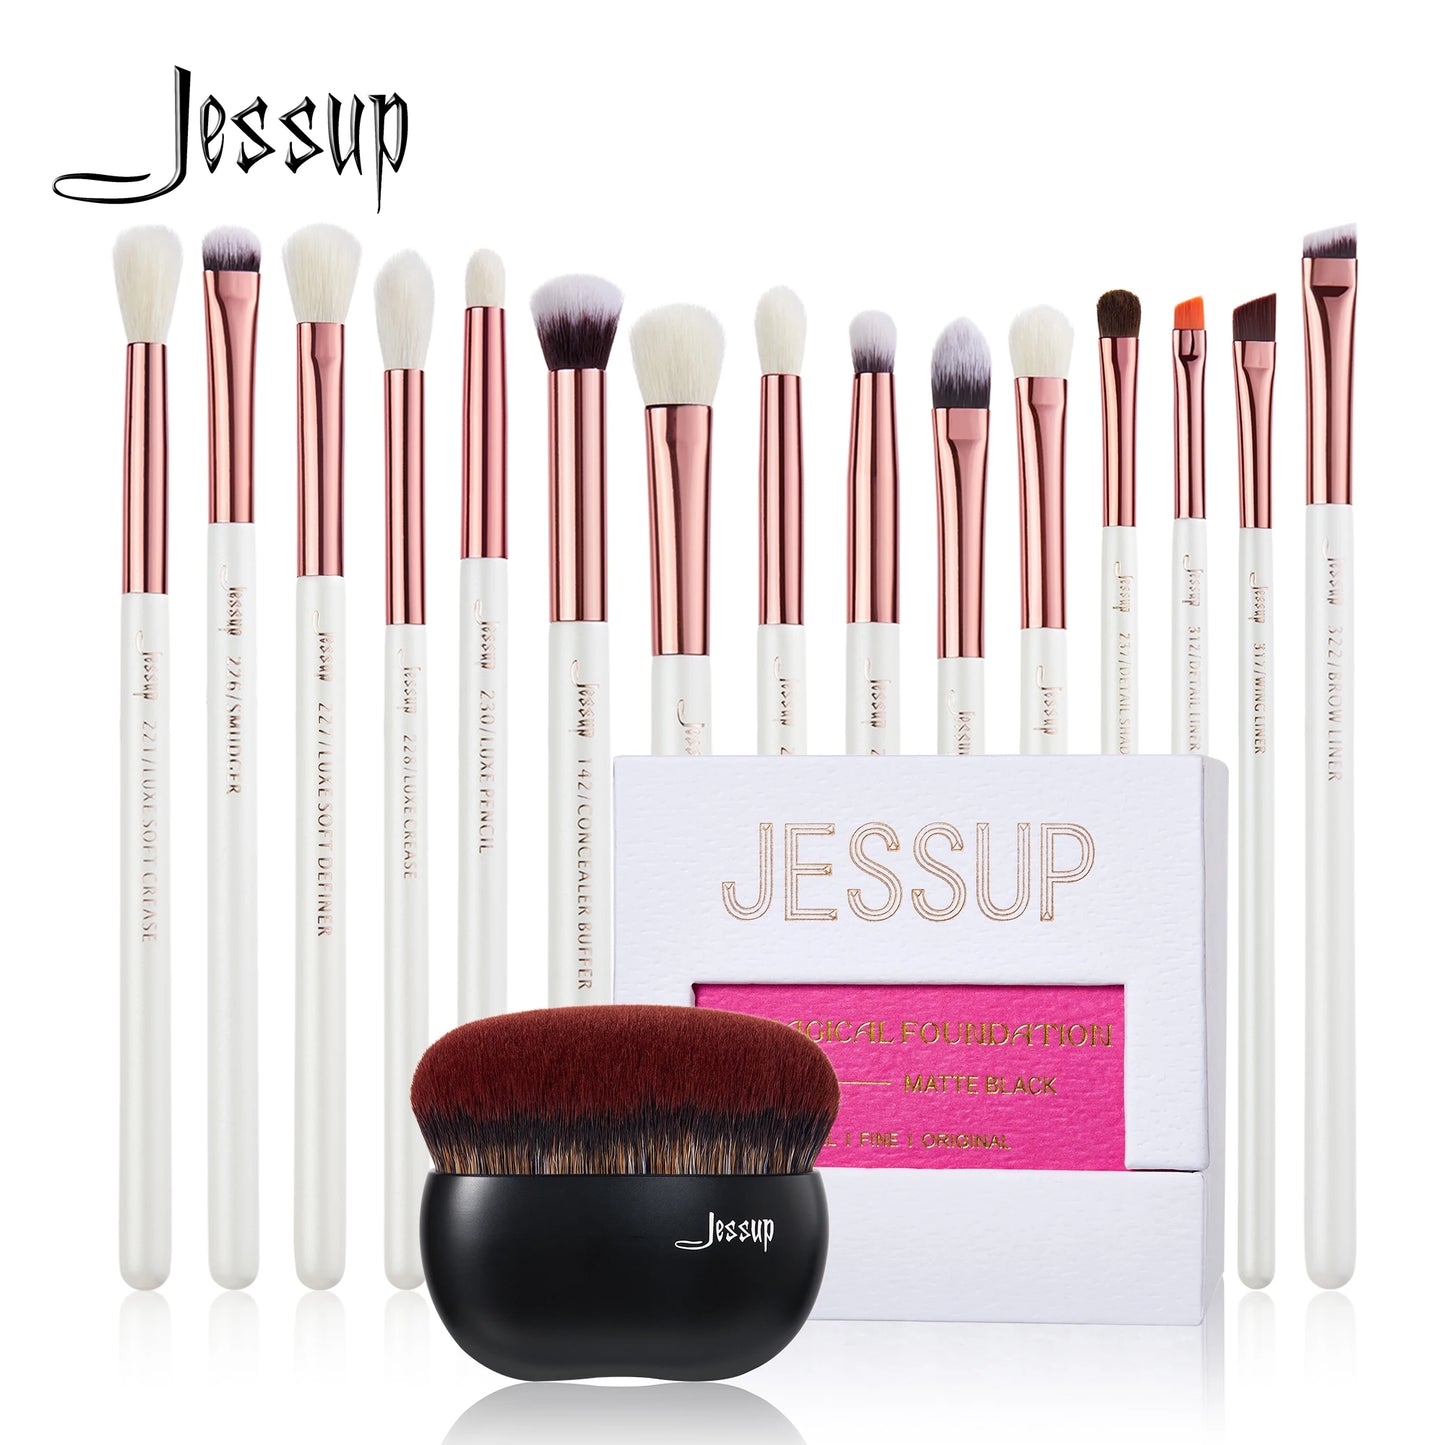 Jessup Makeup Brushes Set 15pcs Eye Brushes Set